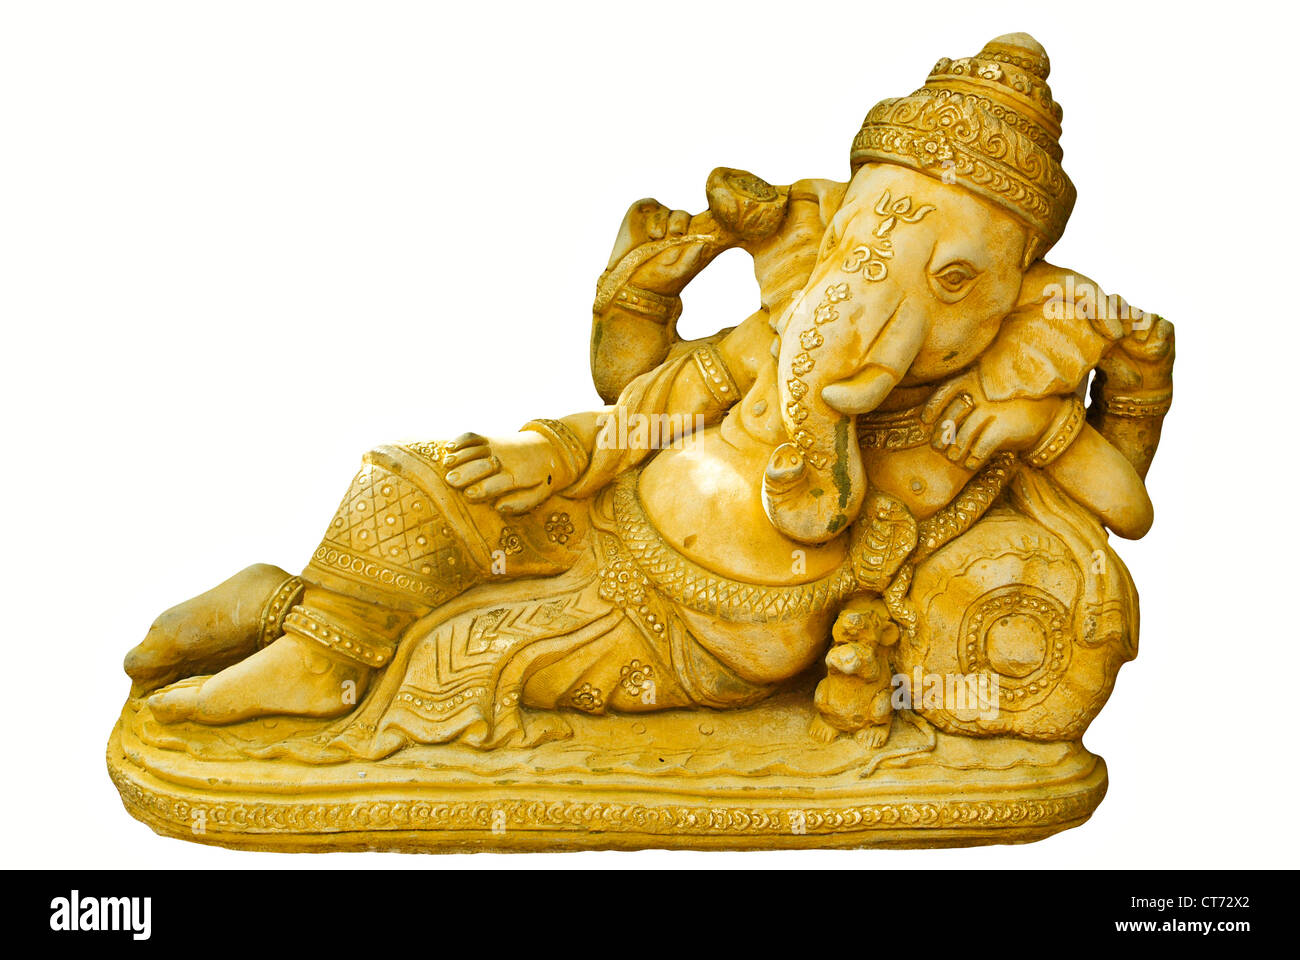 Golden Hindu God Ganesh over a white background Stock Photo - Alamy